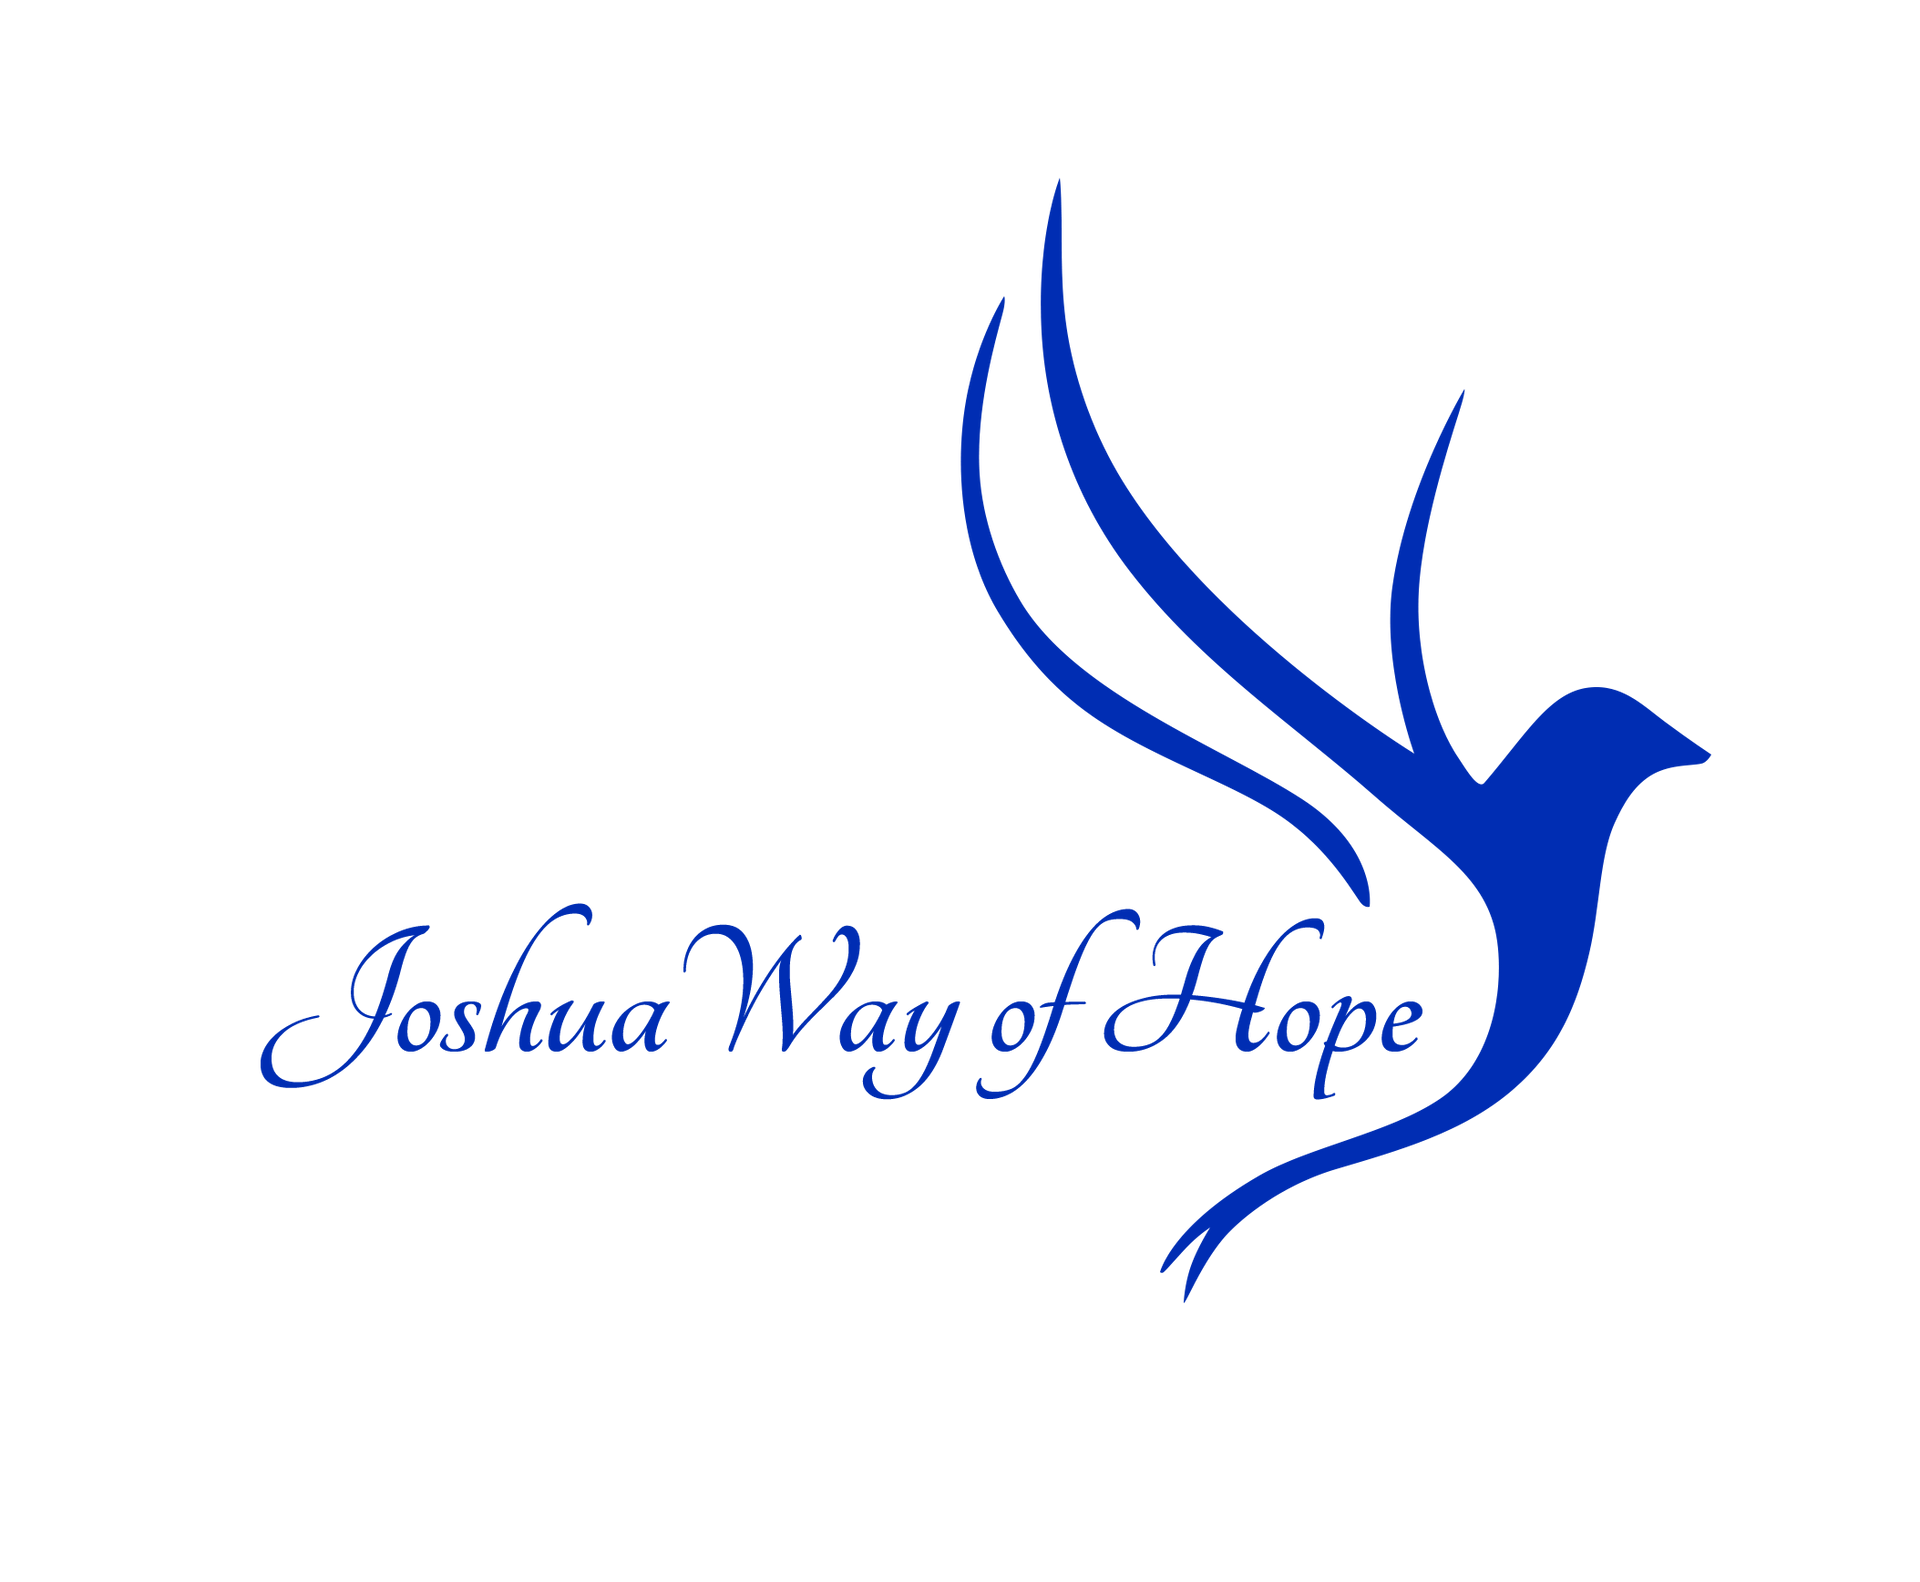 JOSHUA-S_WAY_OF_HOPE-logo